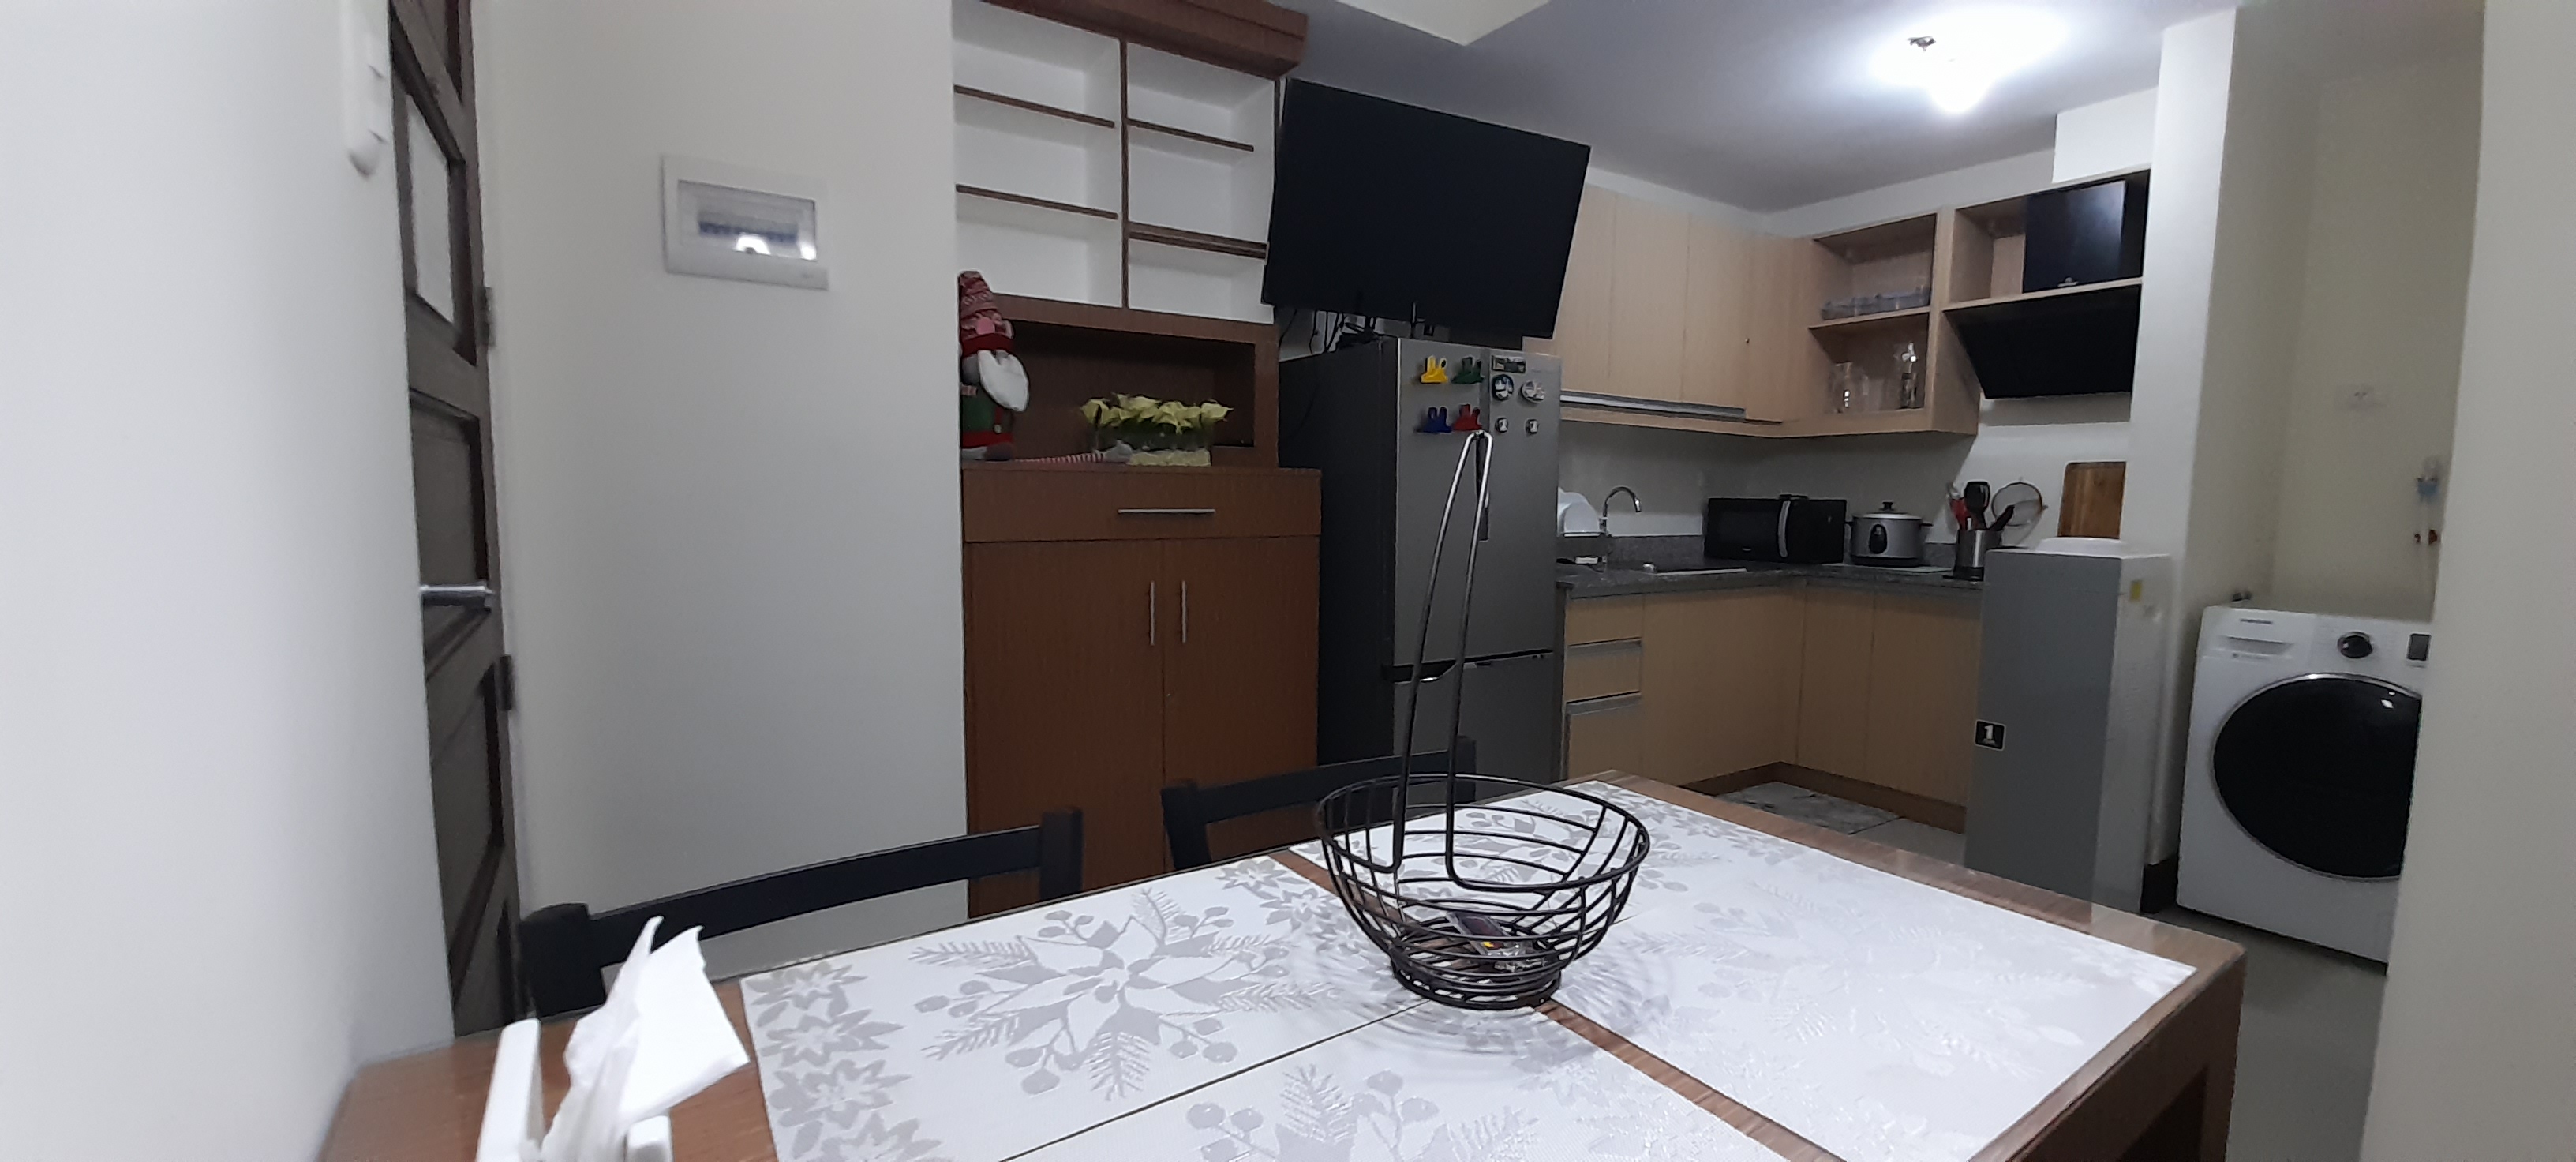 1-bedroom-furnished-condominium-at-grand-residences-mabolo-cebu-city-cebu